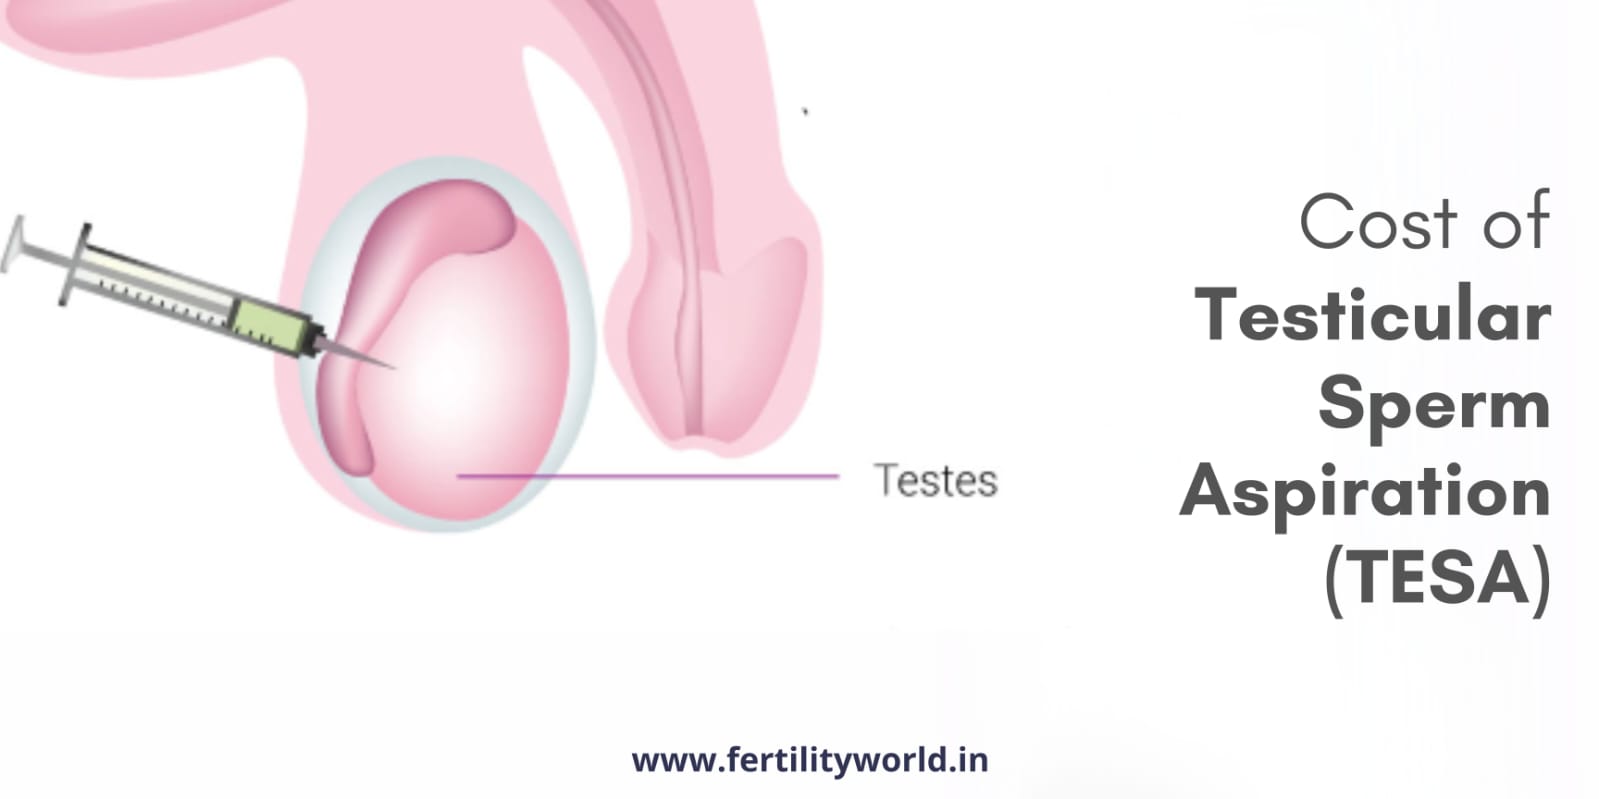 Cost of Testicular Sperm Aspiration (TESA) in India